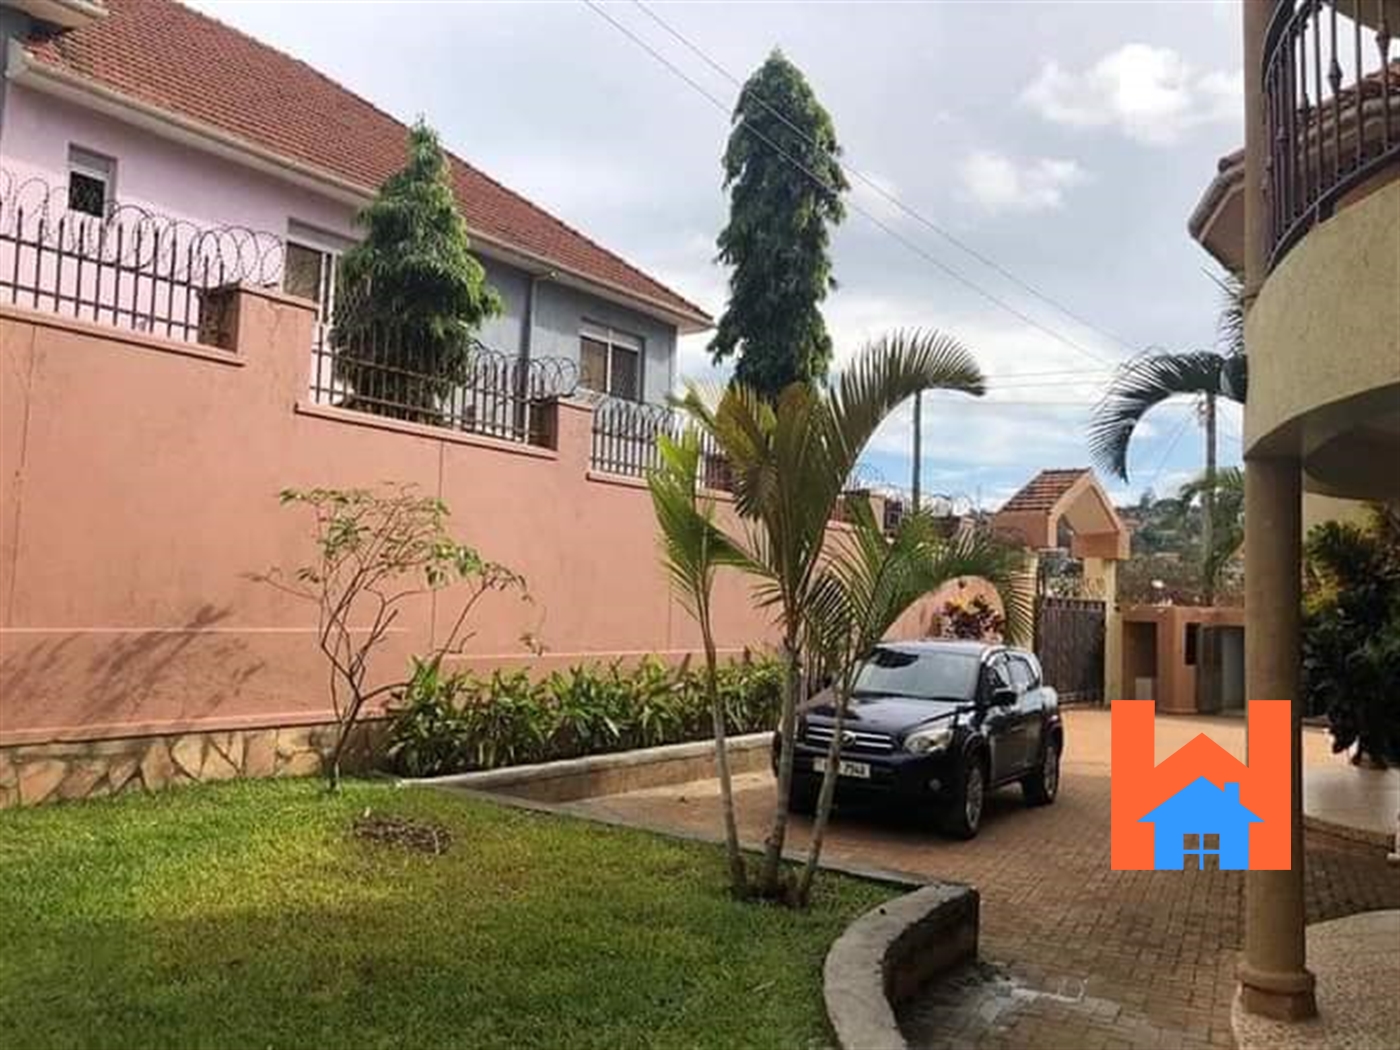 Storeyed house for sale in Bweyogerere Kampala